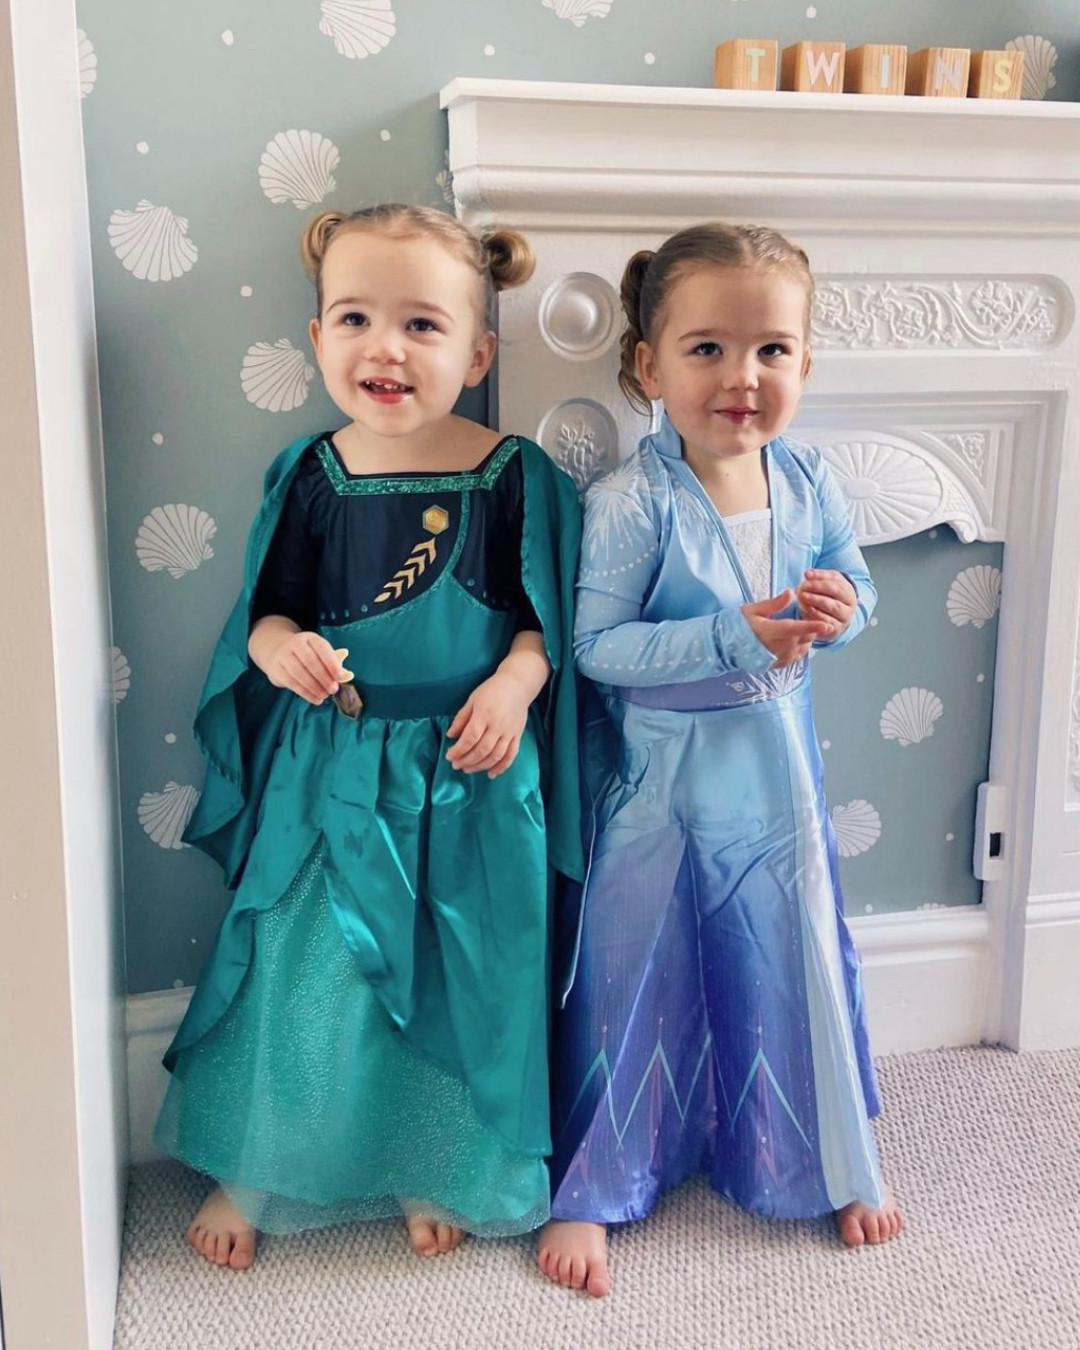 Elsa 10th Anniversary Deluxe Costume For Kids, Frozen